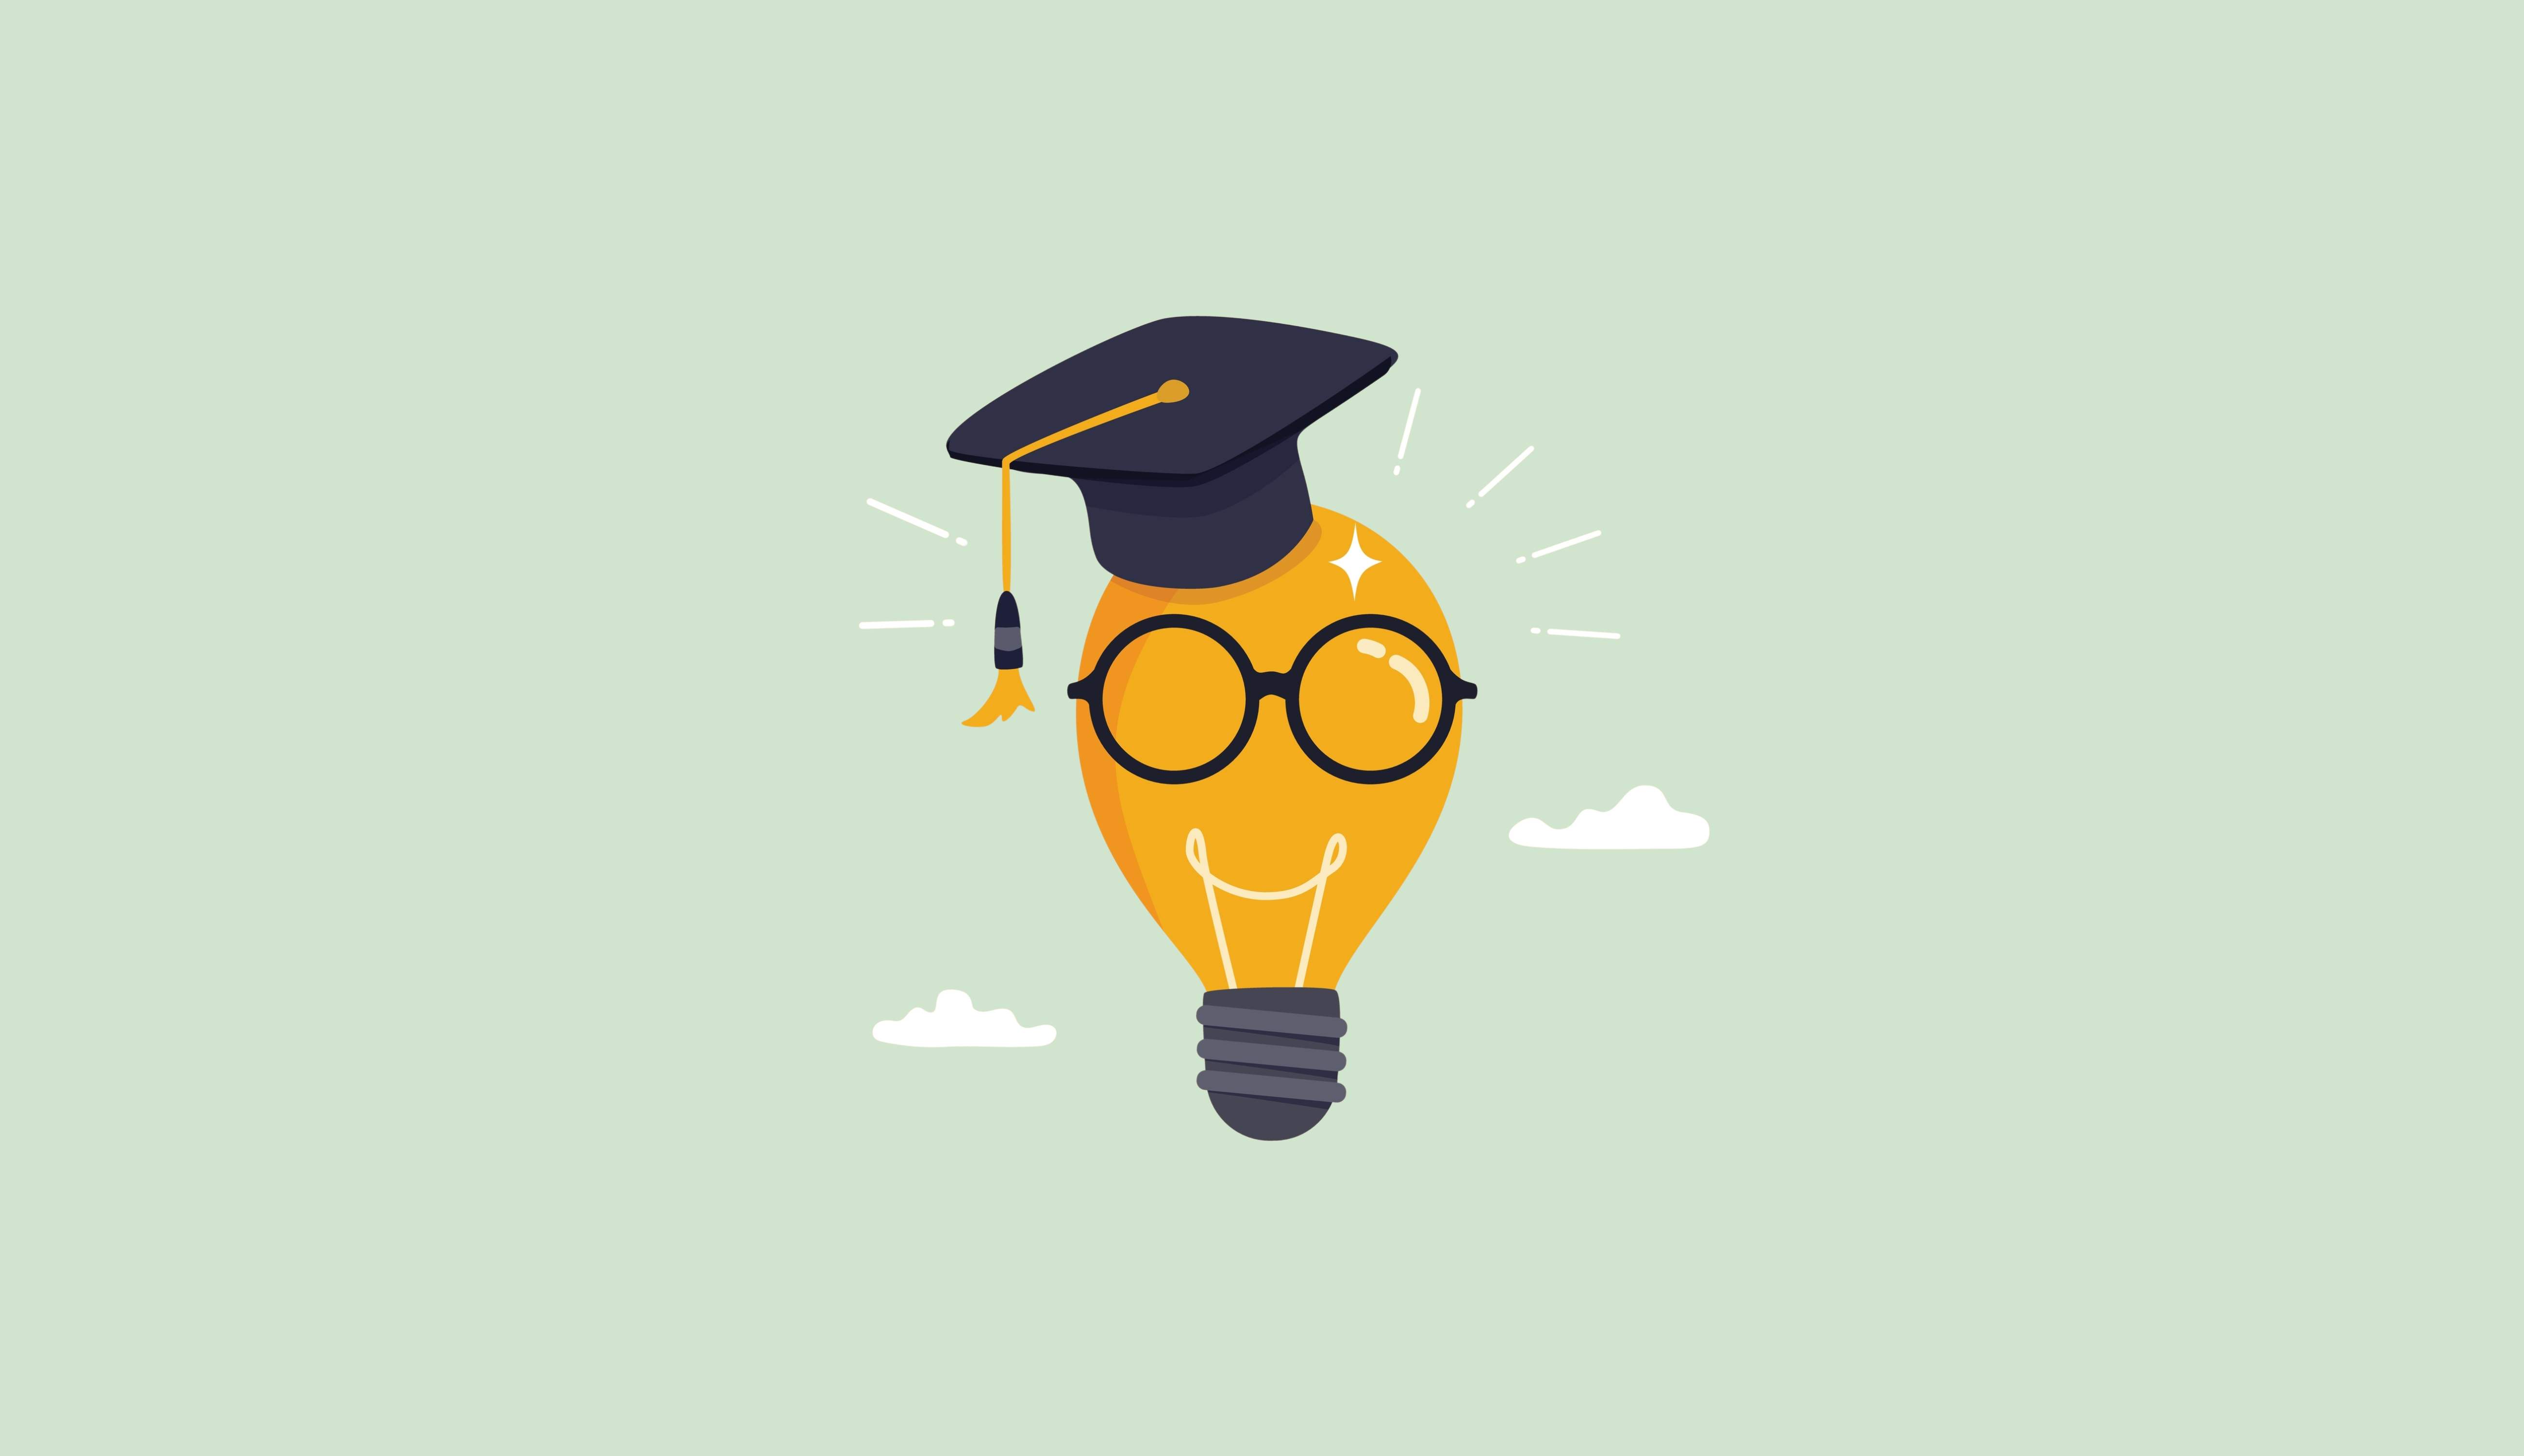 Lightbulb with Graduation Cap